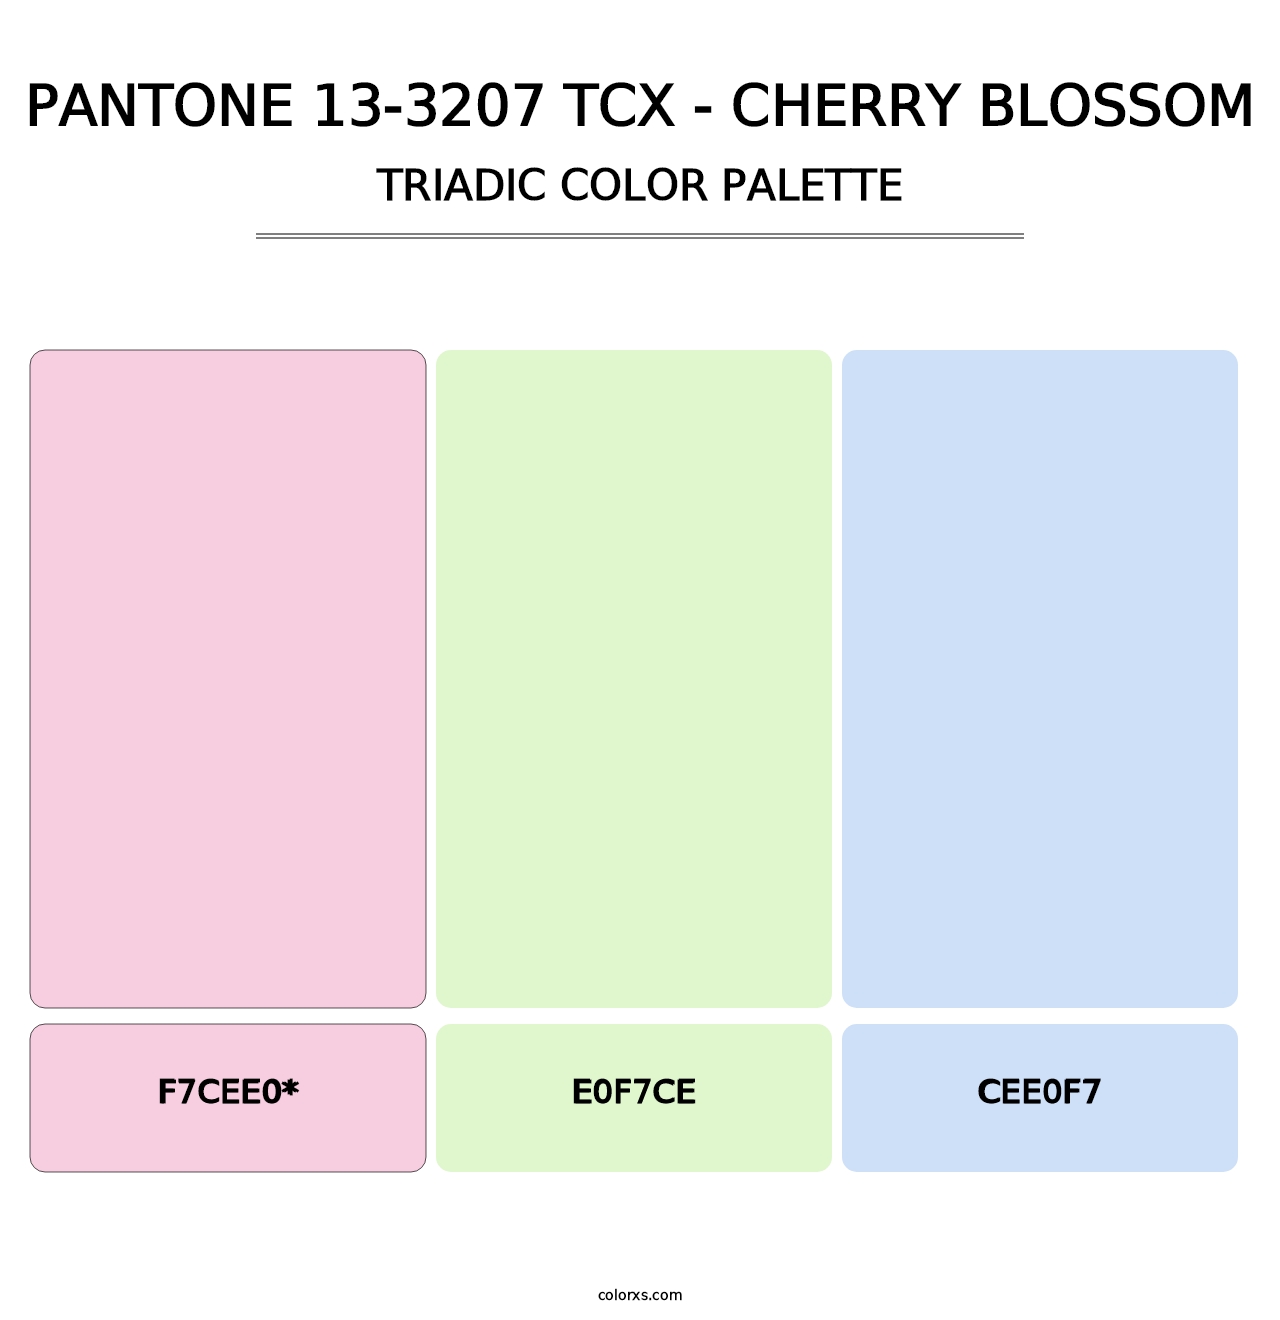 PANTONE 13-3207 TCX - Cherry Blossom - Triadic Color Palette